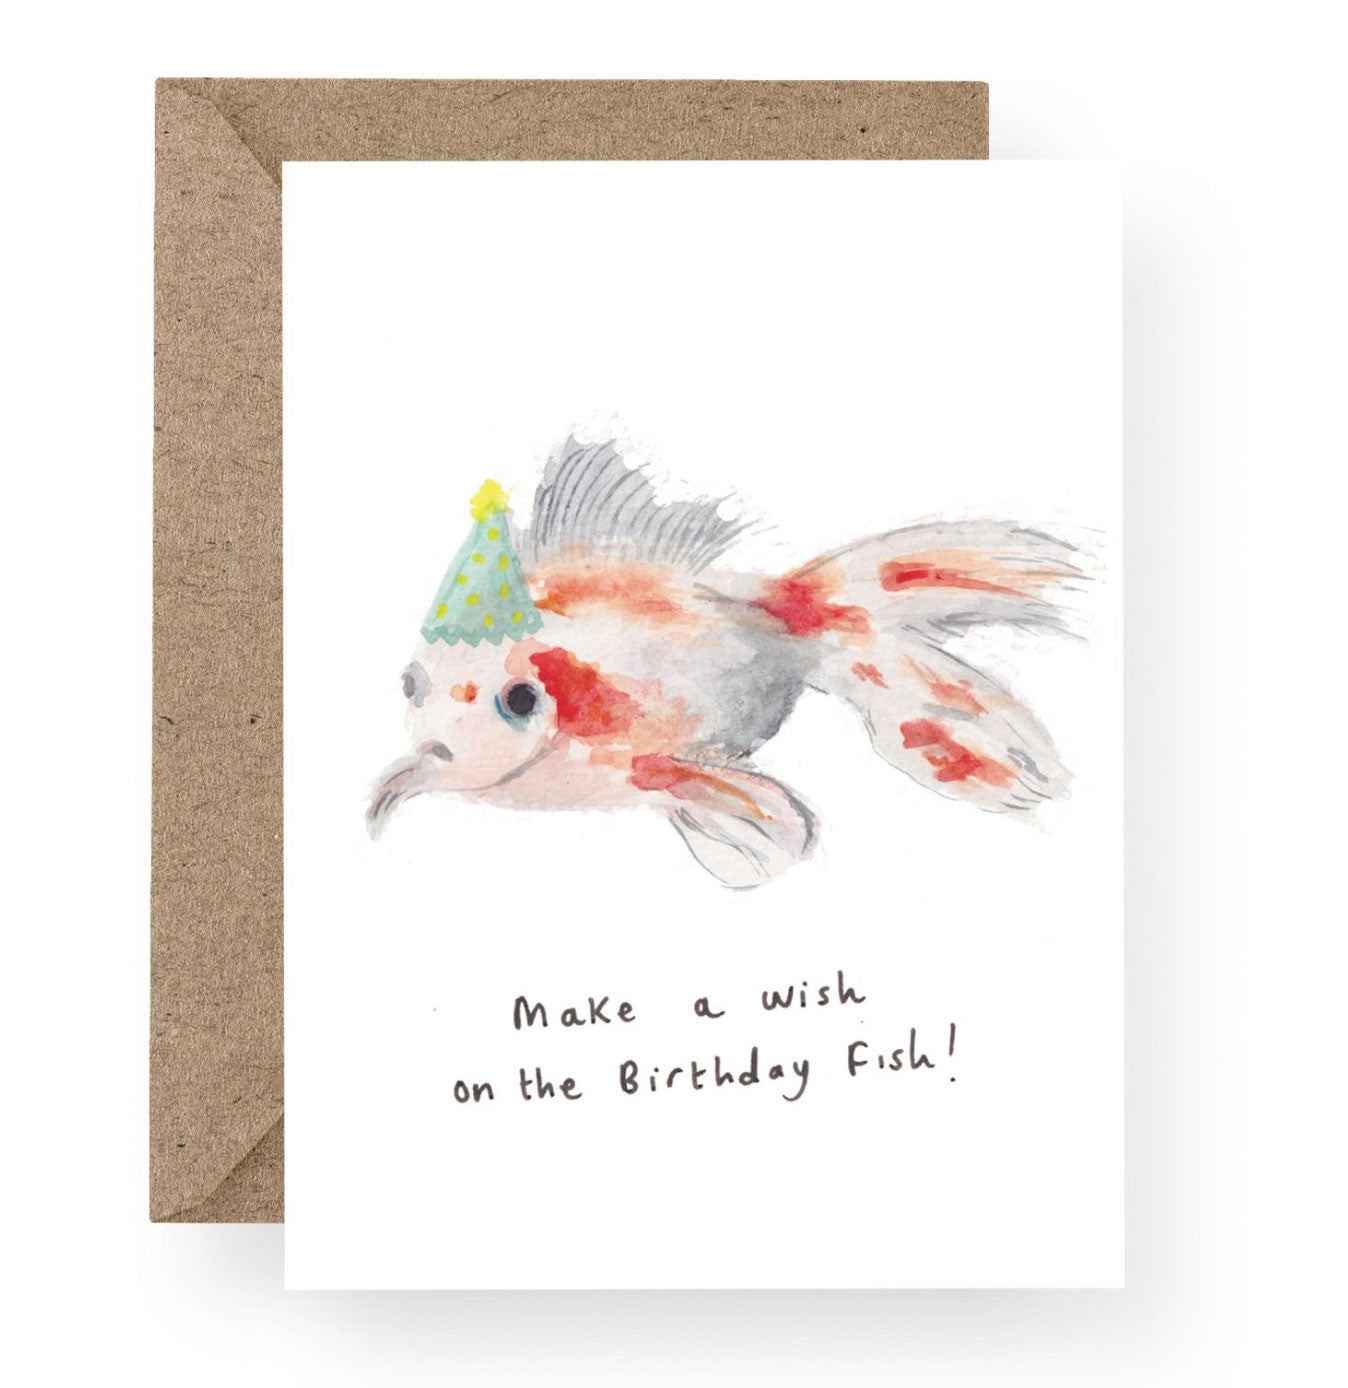 The Birthday Fish